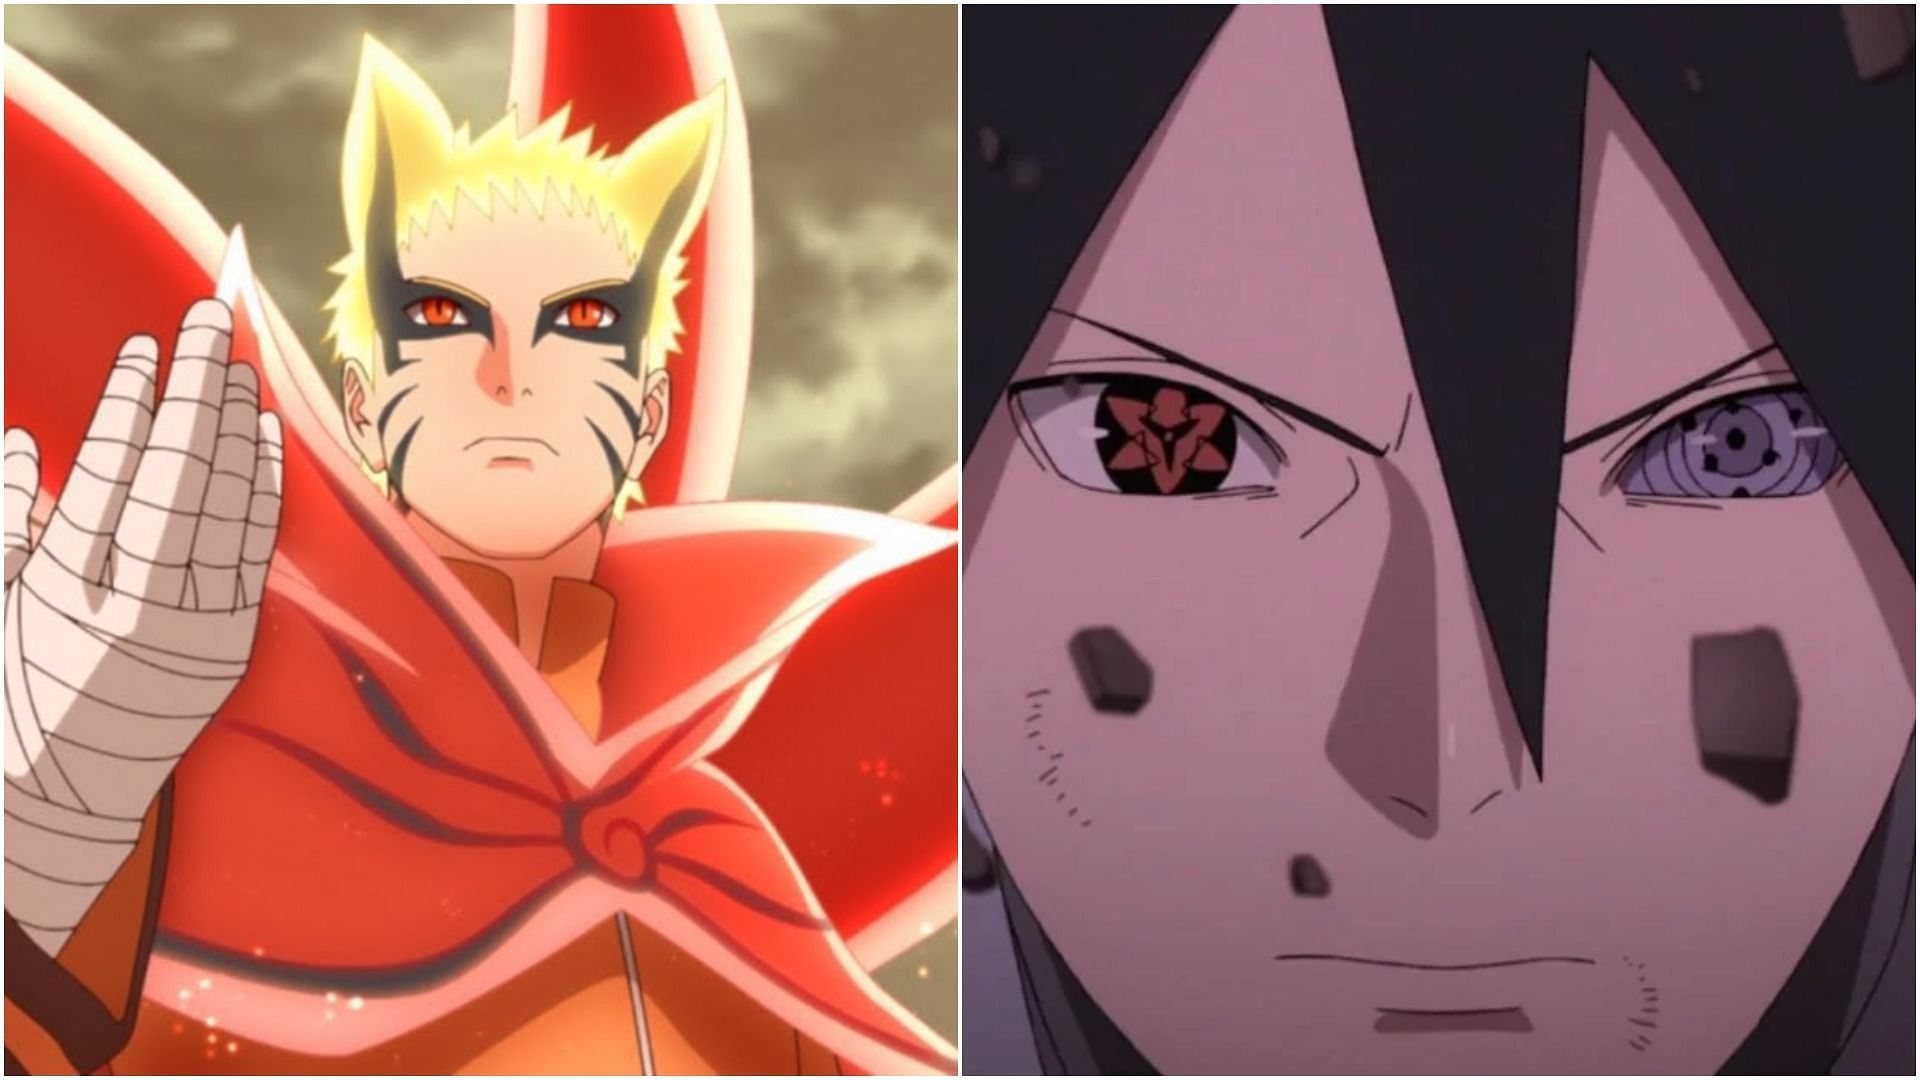 Baryon Mode Naruto and Sasuke from the Boruto series (images via Pierrot)